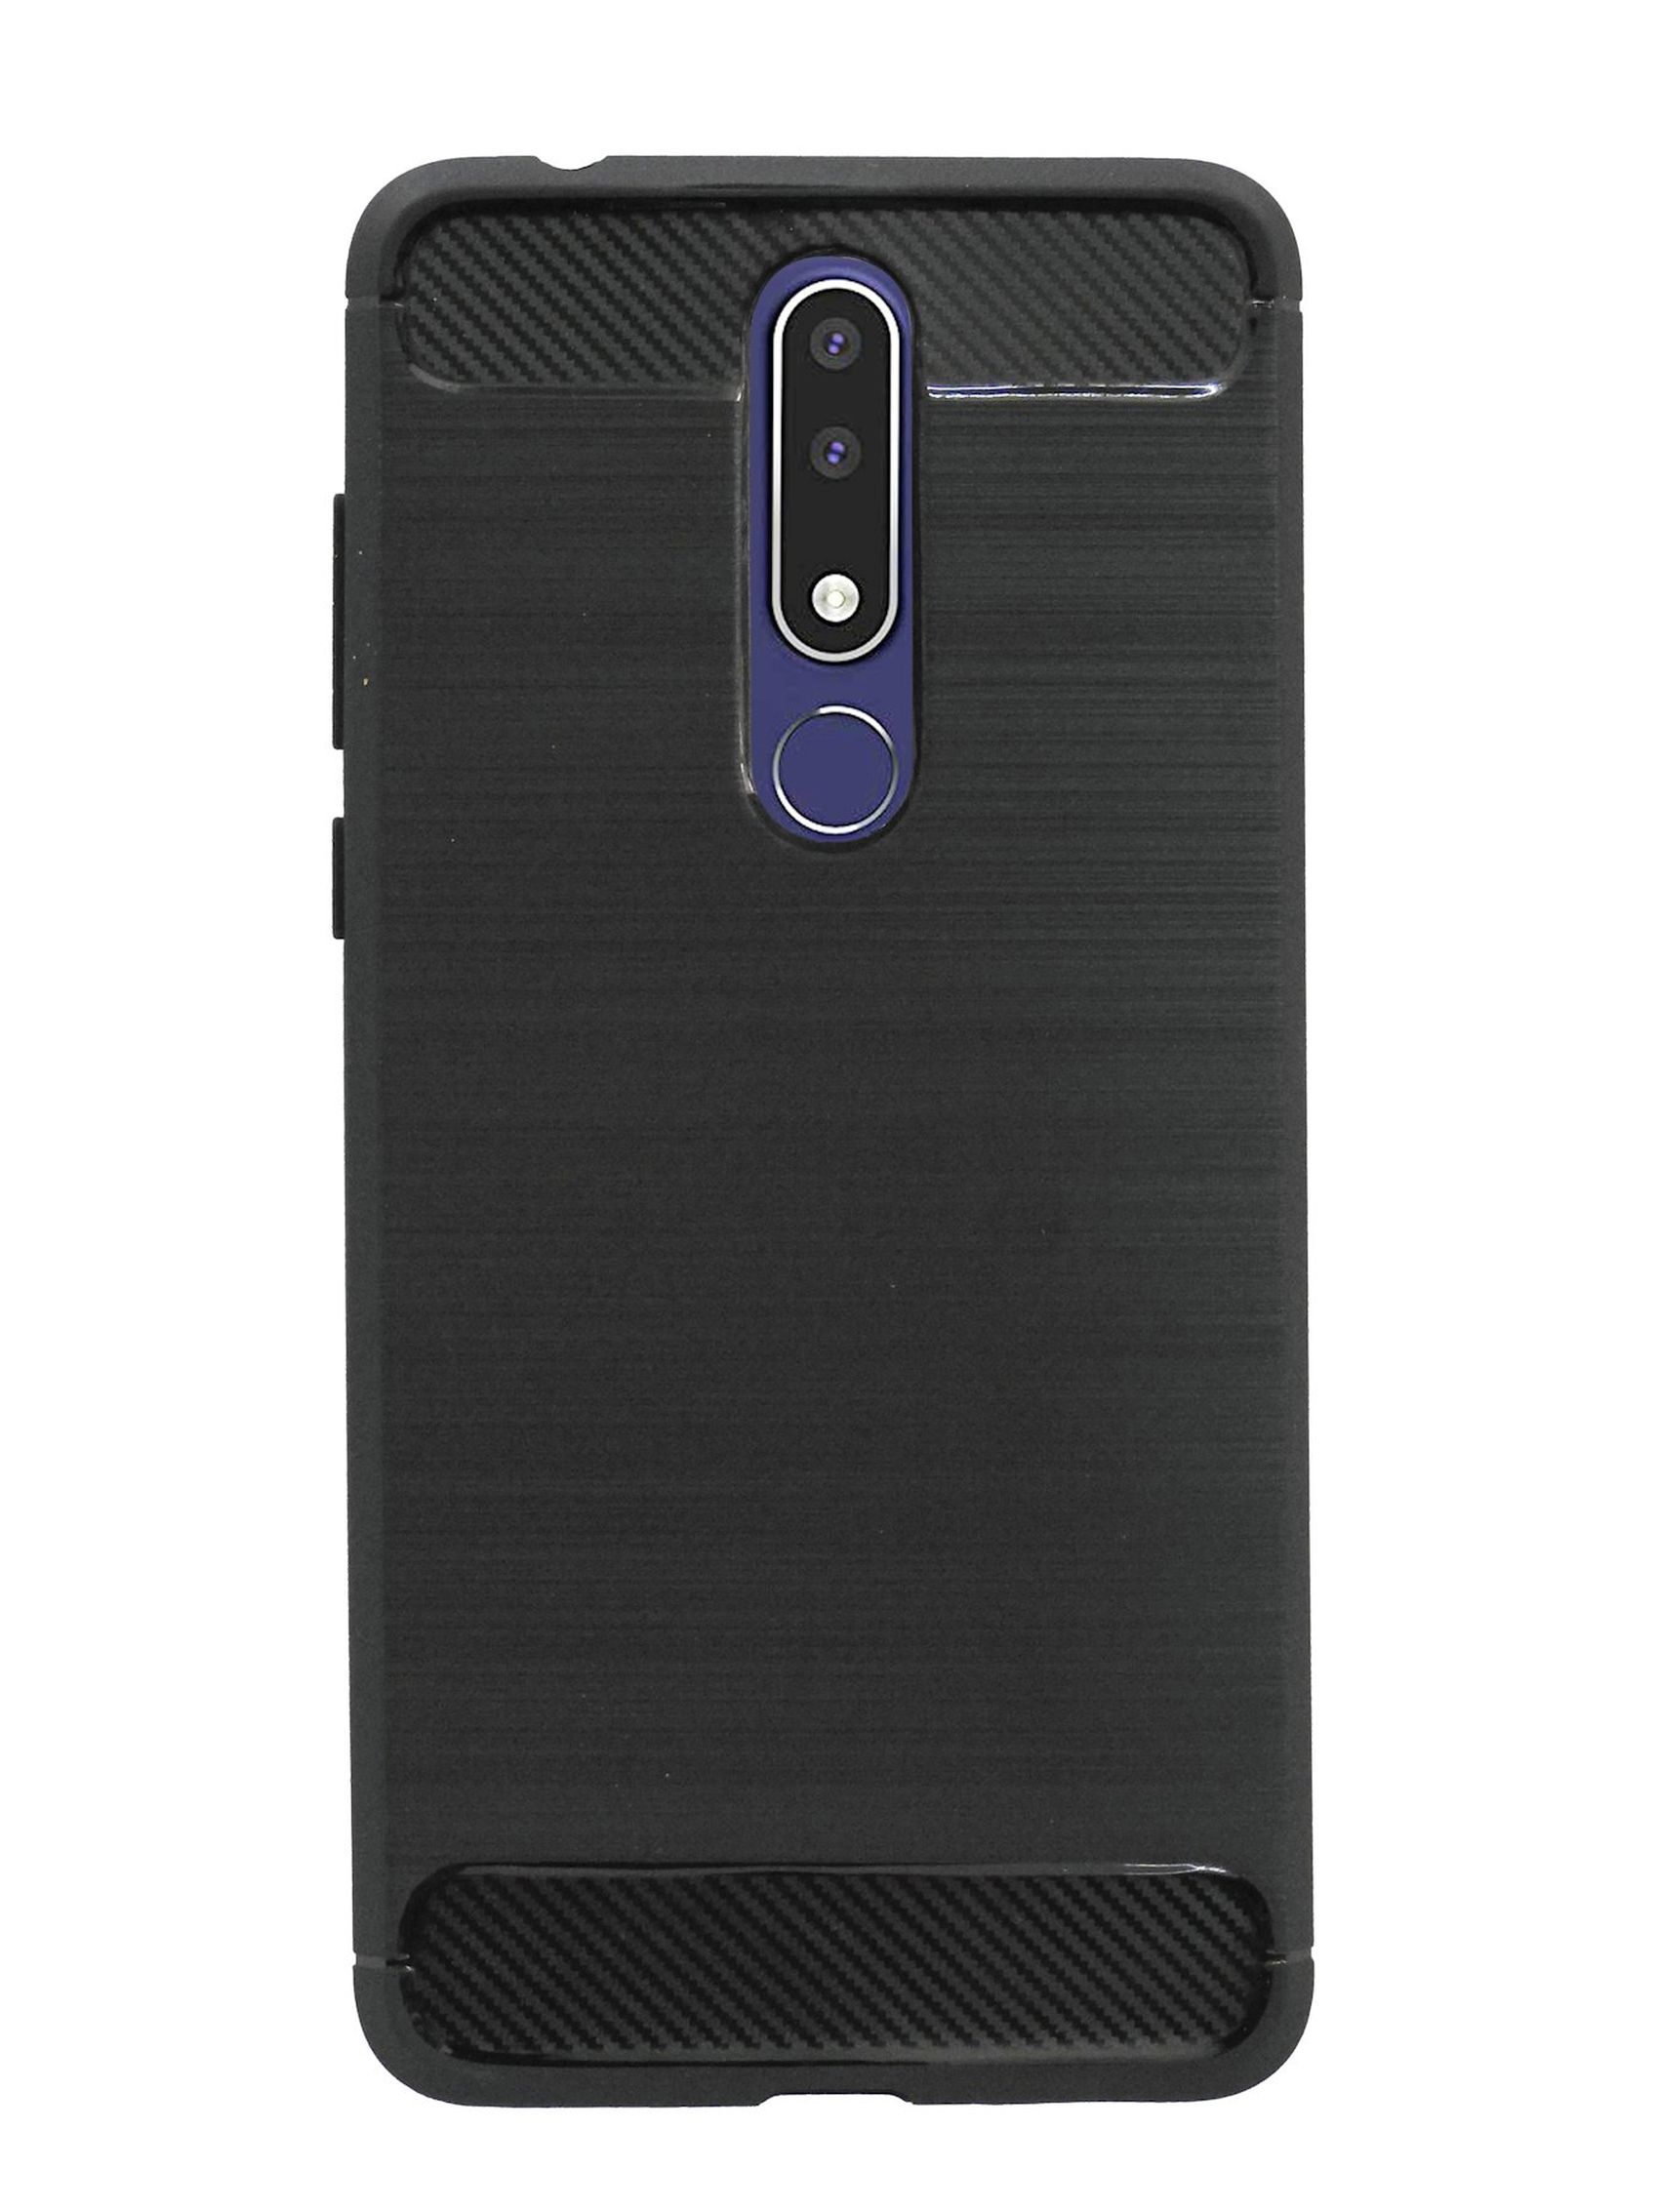 COFI Carbon-Look Case, Bumper, Nokia, Plus, Schwarz 3.1